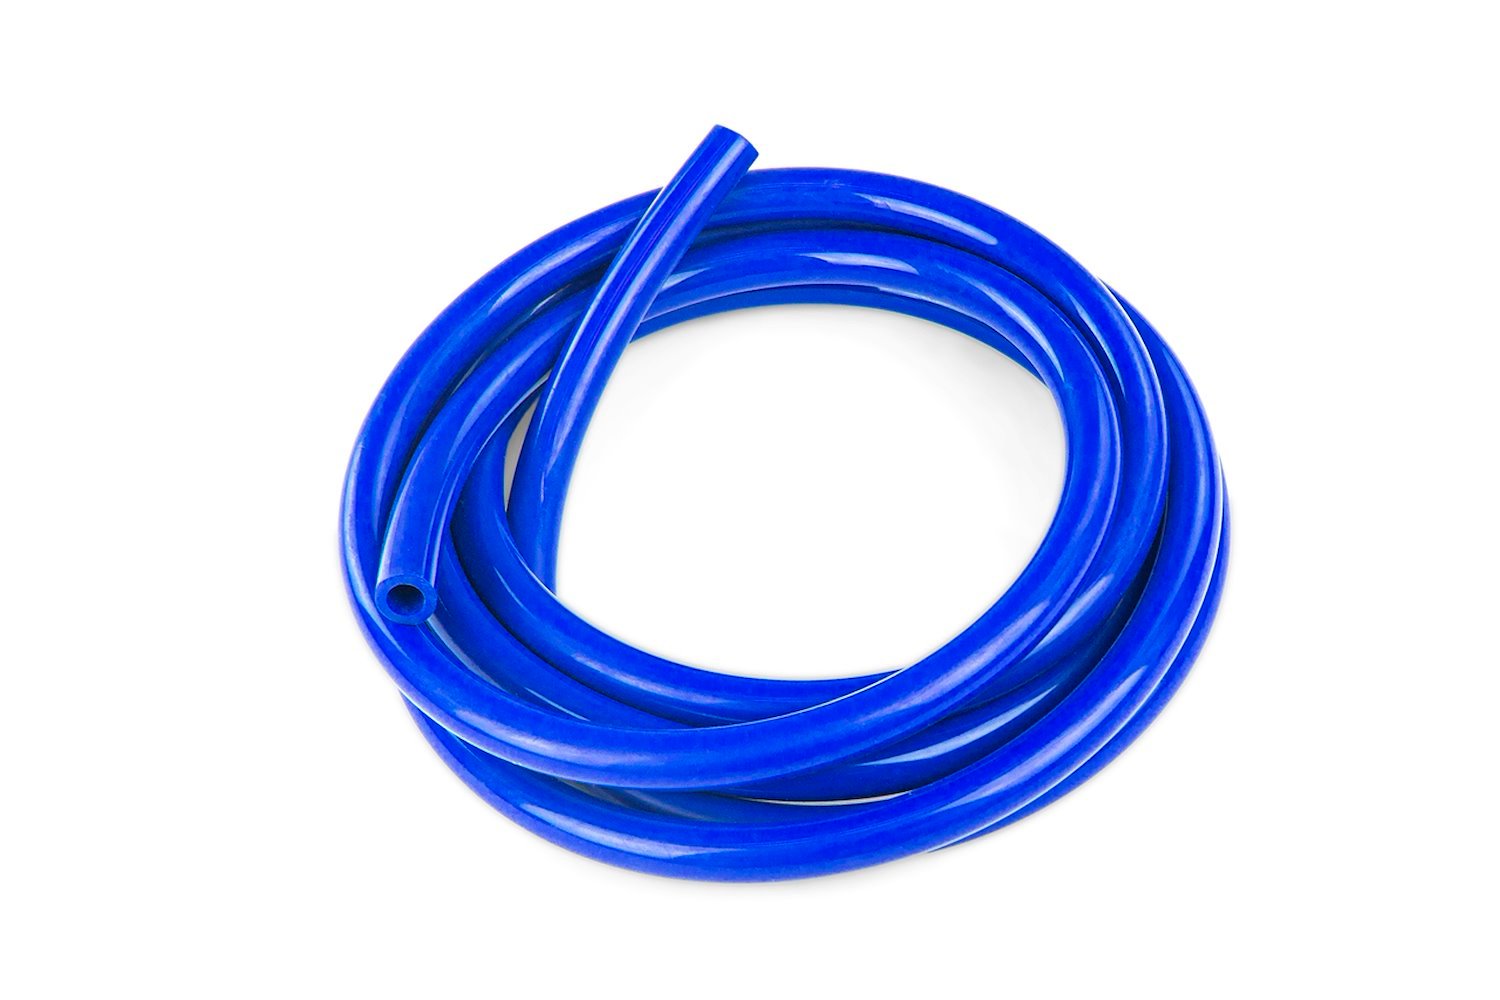 HTSVH7-BLUEx25 High-Temperature Silicone Vacuum Hose Tubing, 9/32 in. ID, 25 ft. Roll, Blue